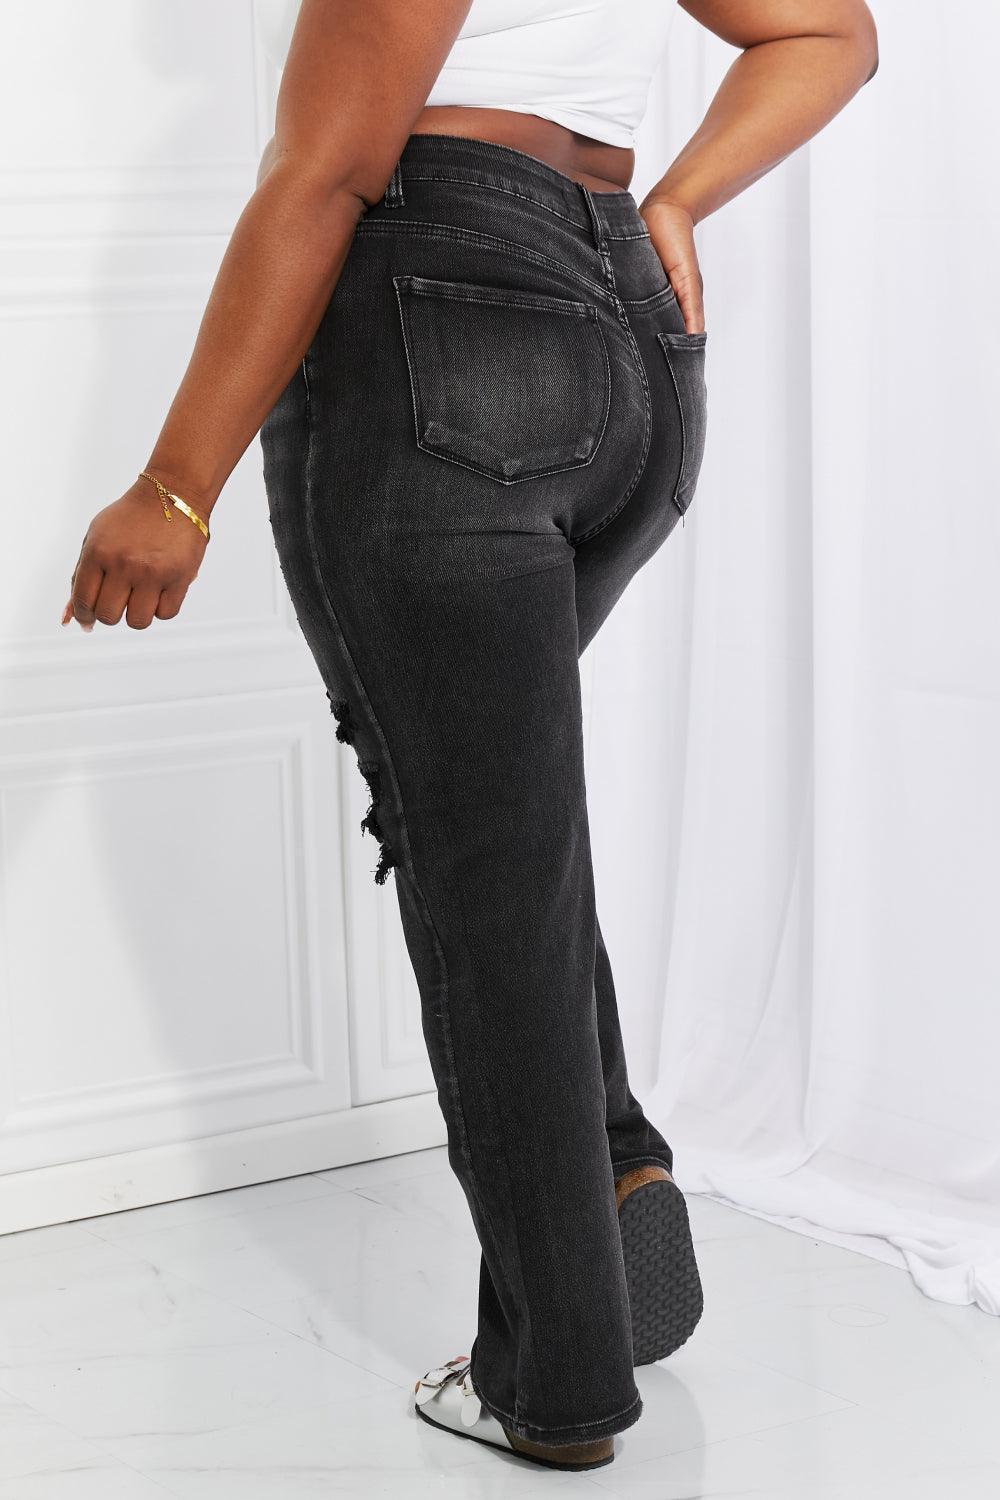 Rebel Girl Mid Rise Plus Size Black Distressed Jeans - MXSTUDIO.COM